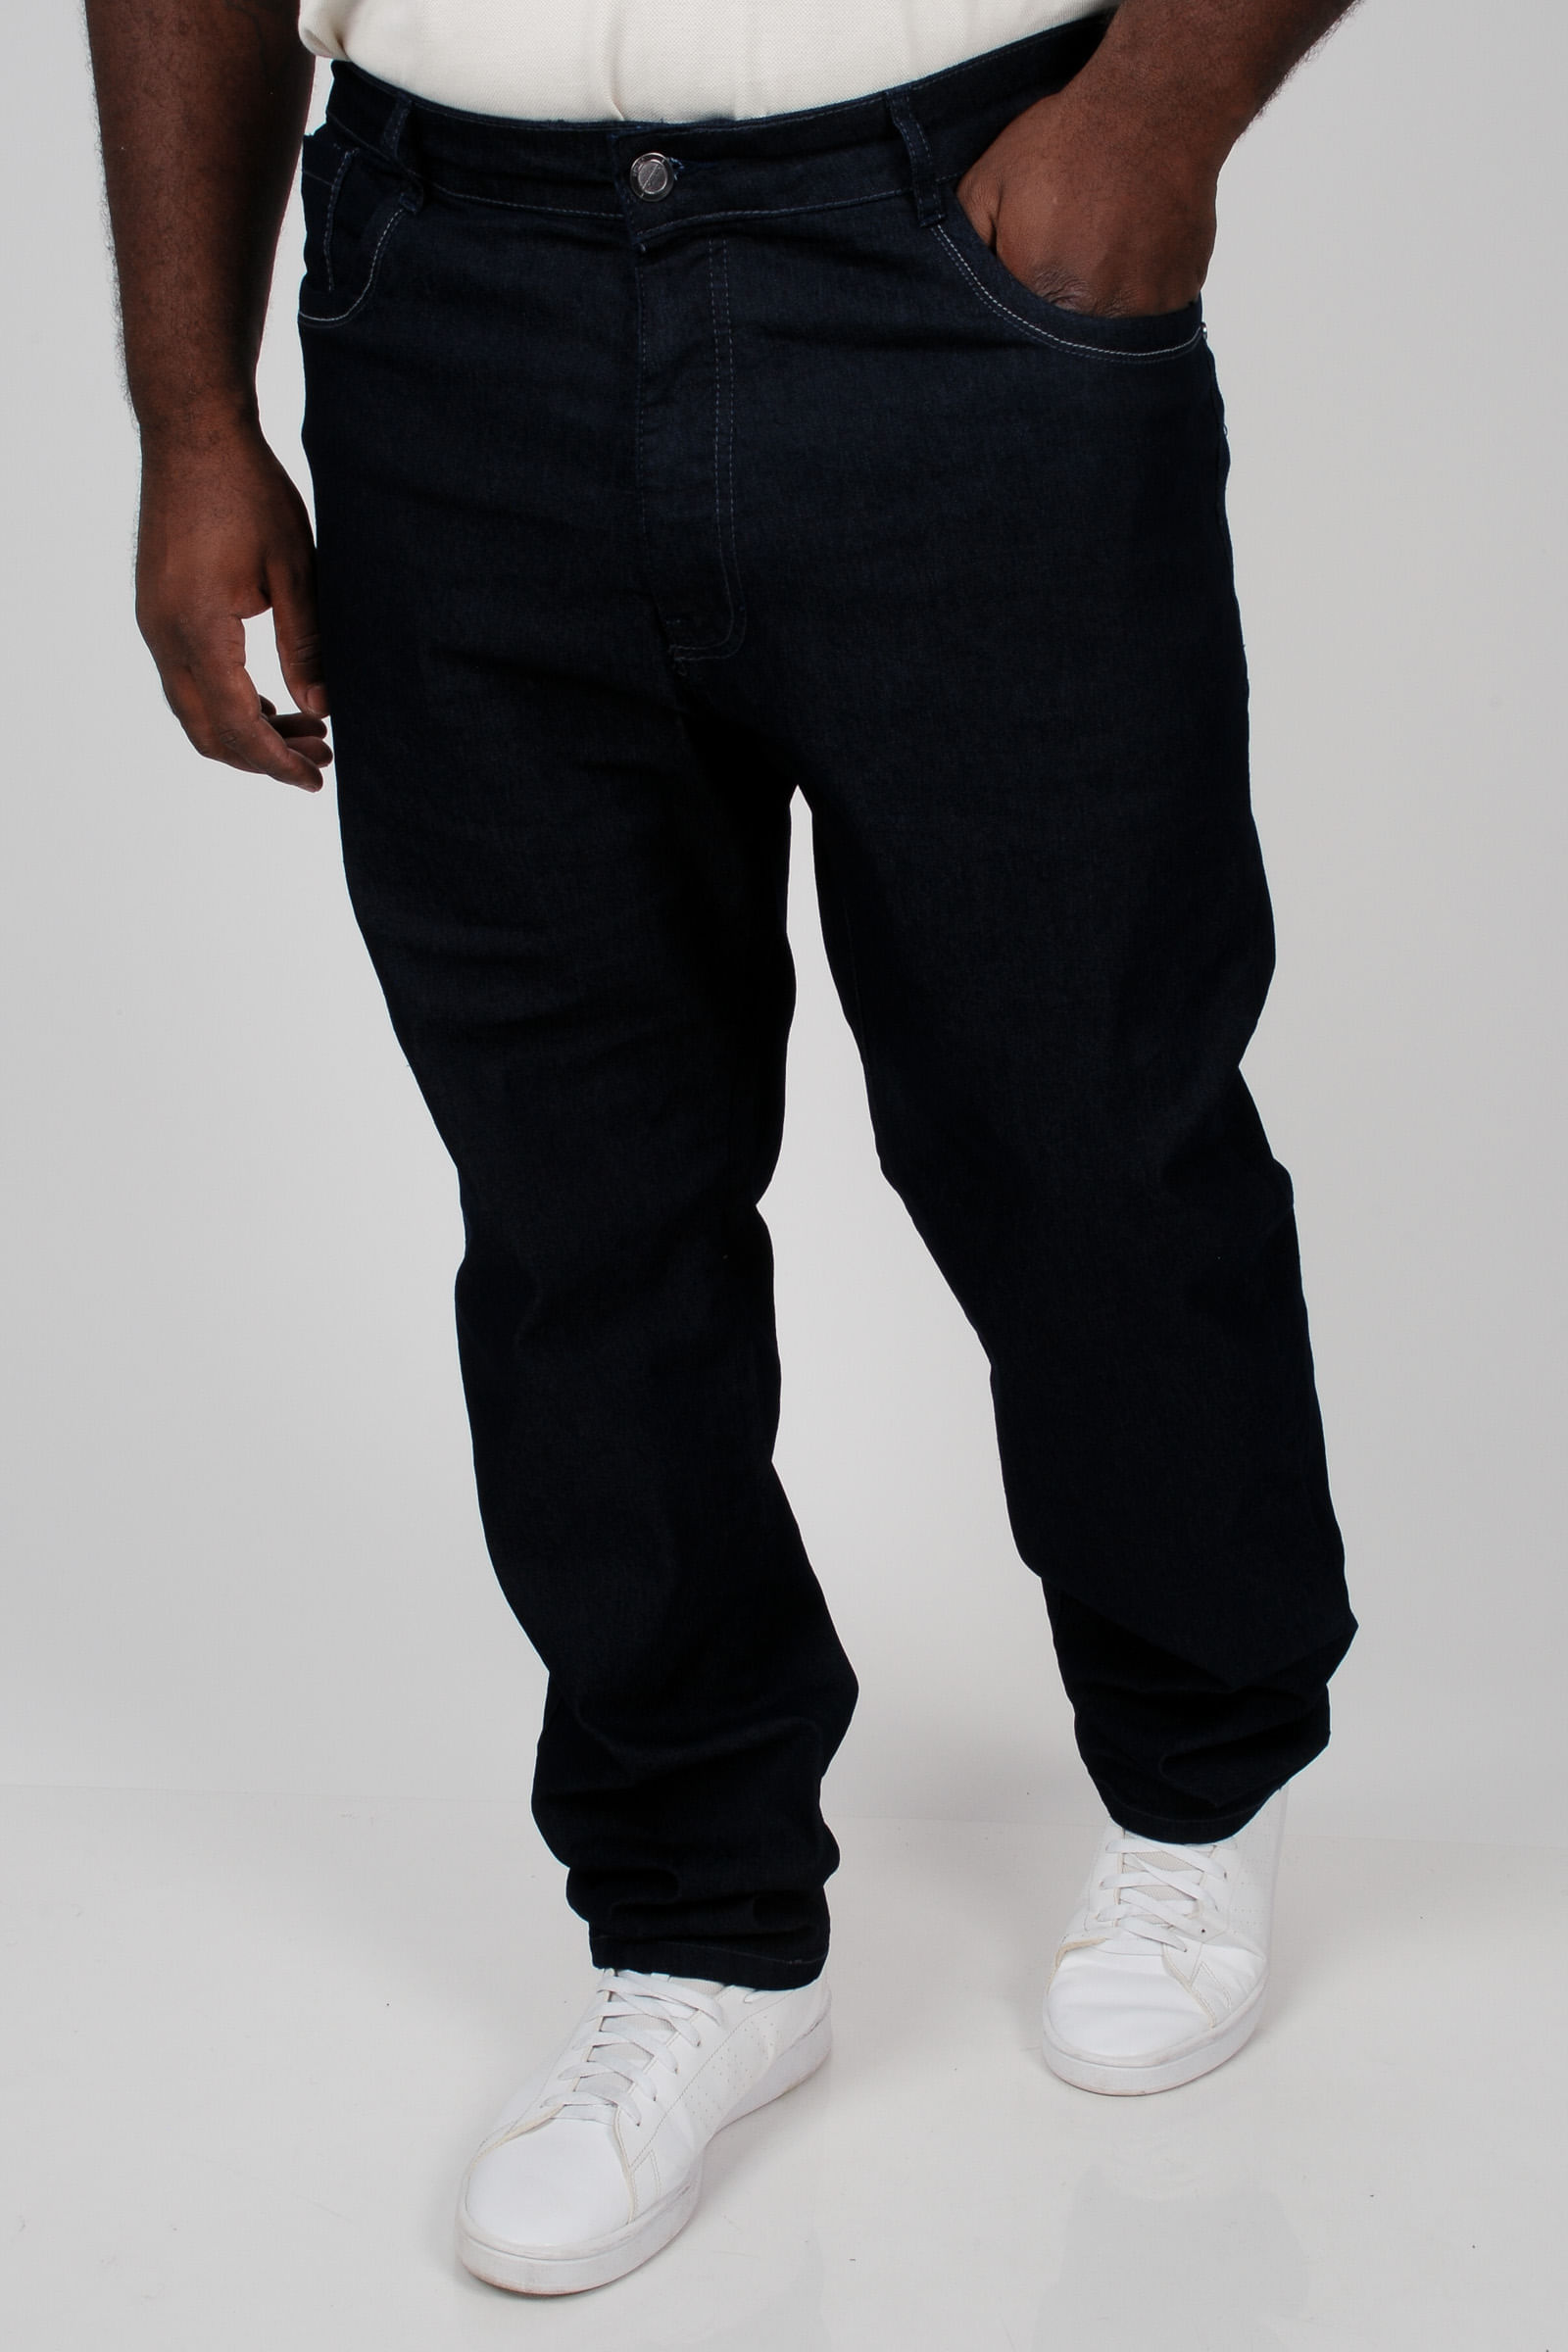 Calca-reta-jeans-masculina-plus-size_0102_1